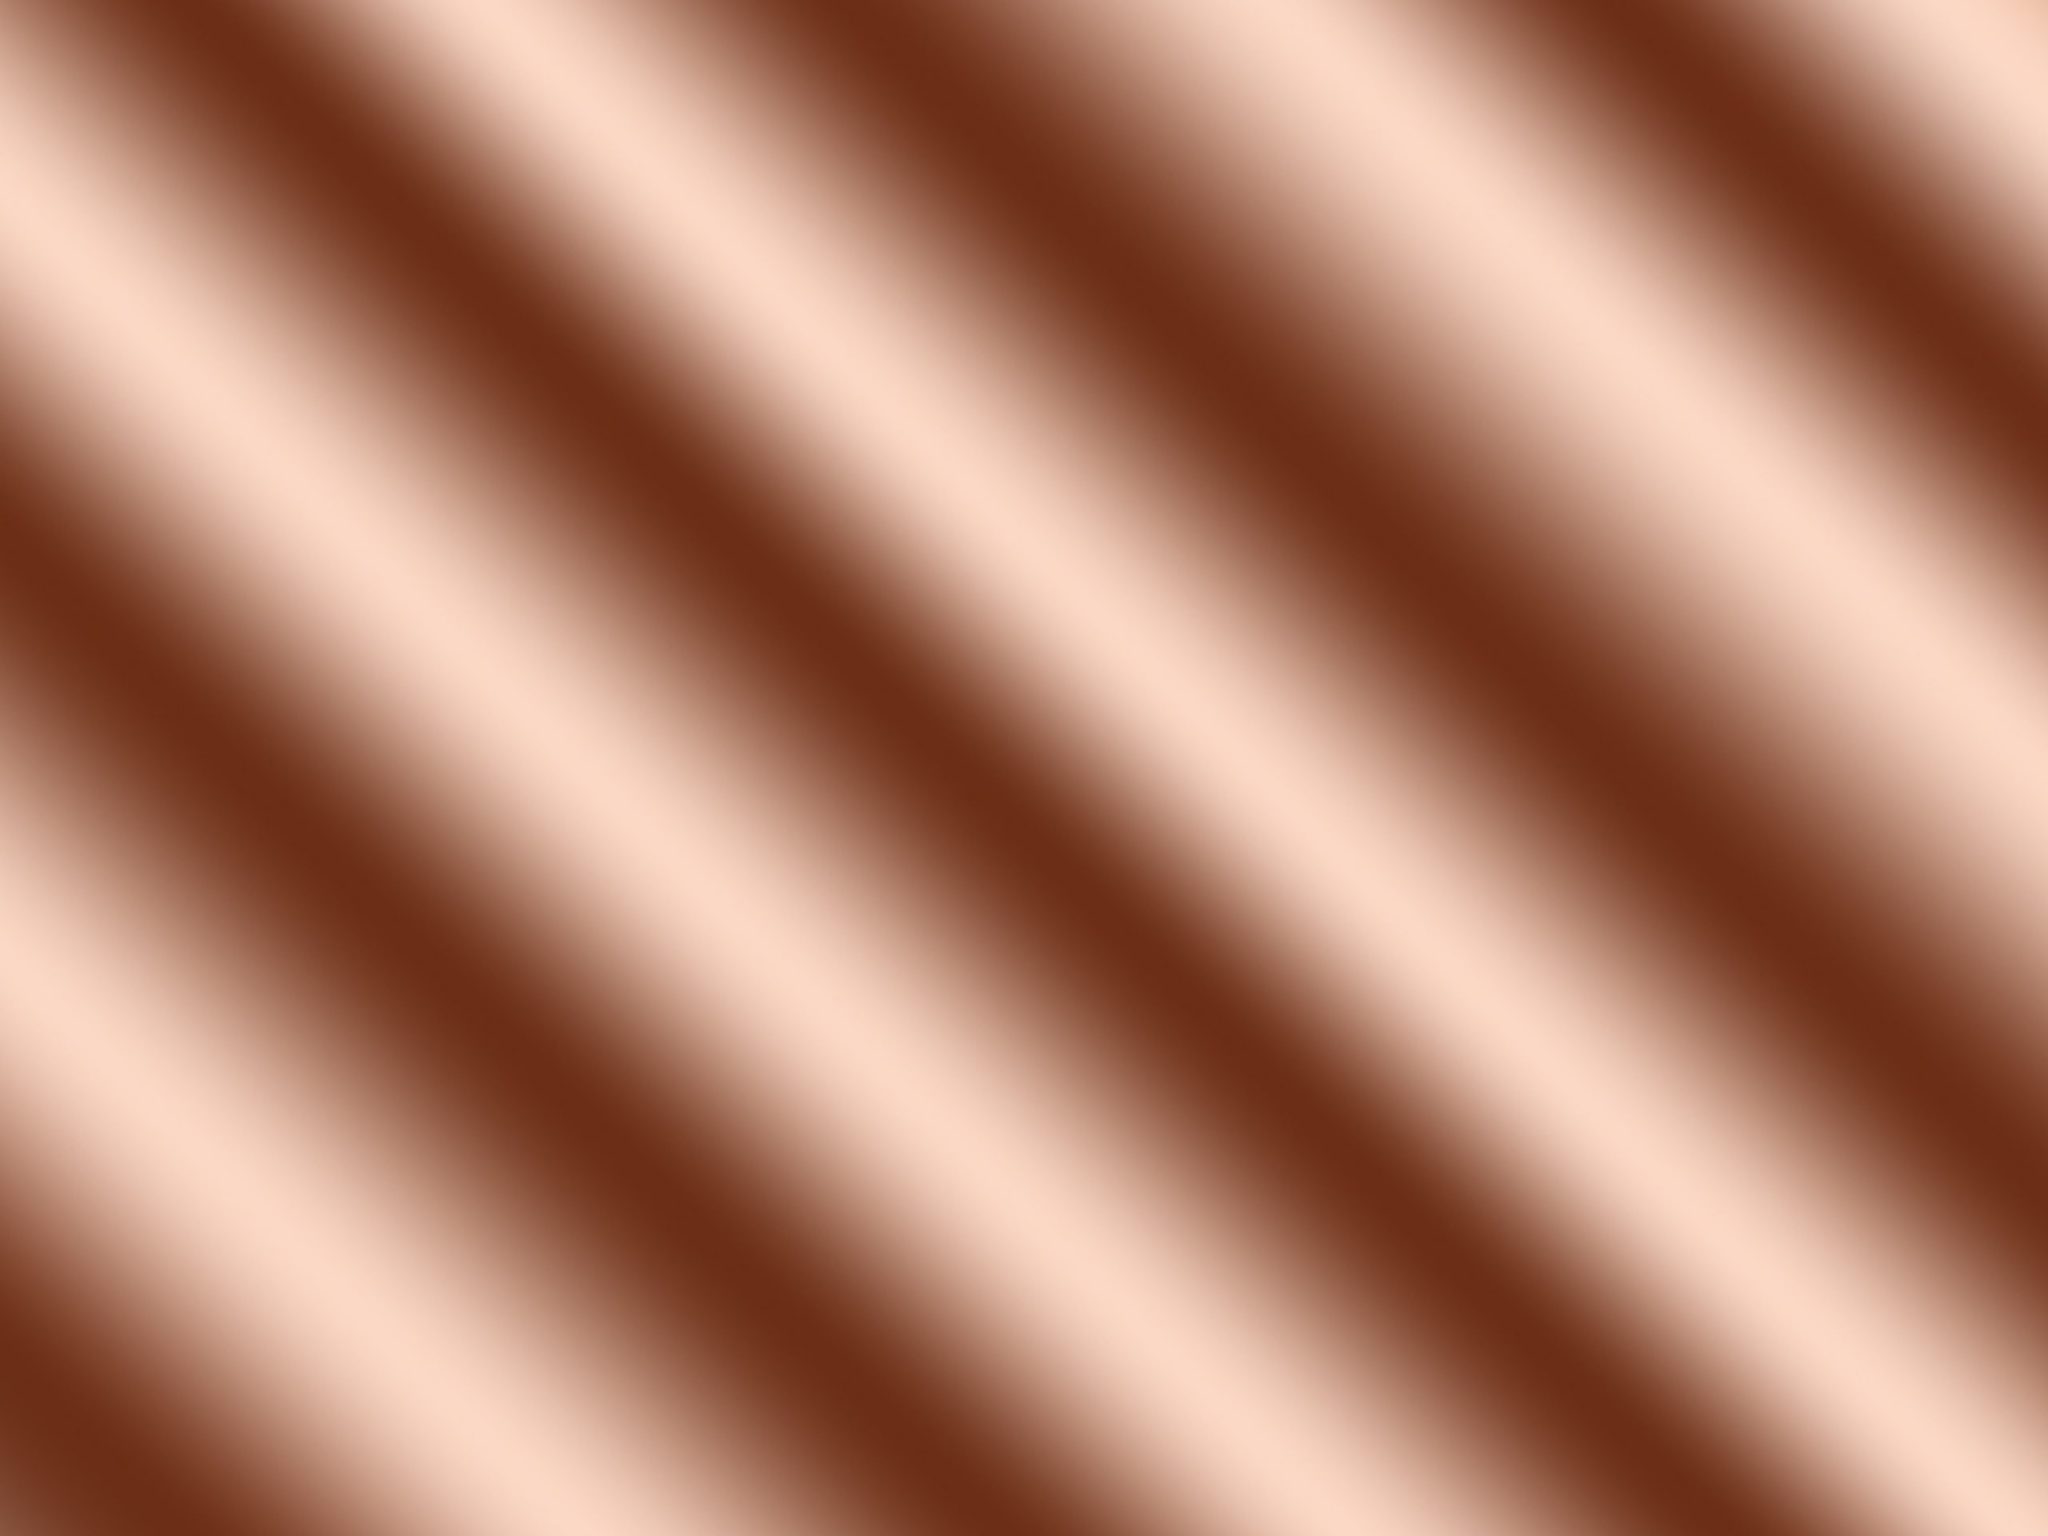 2048x1536 wallpaper Pattern Background Abstract iPad Wallpaper 2048x1536 pixels resolution